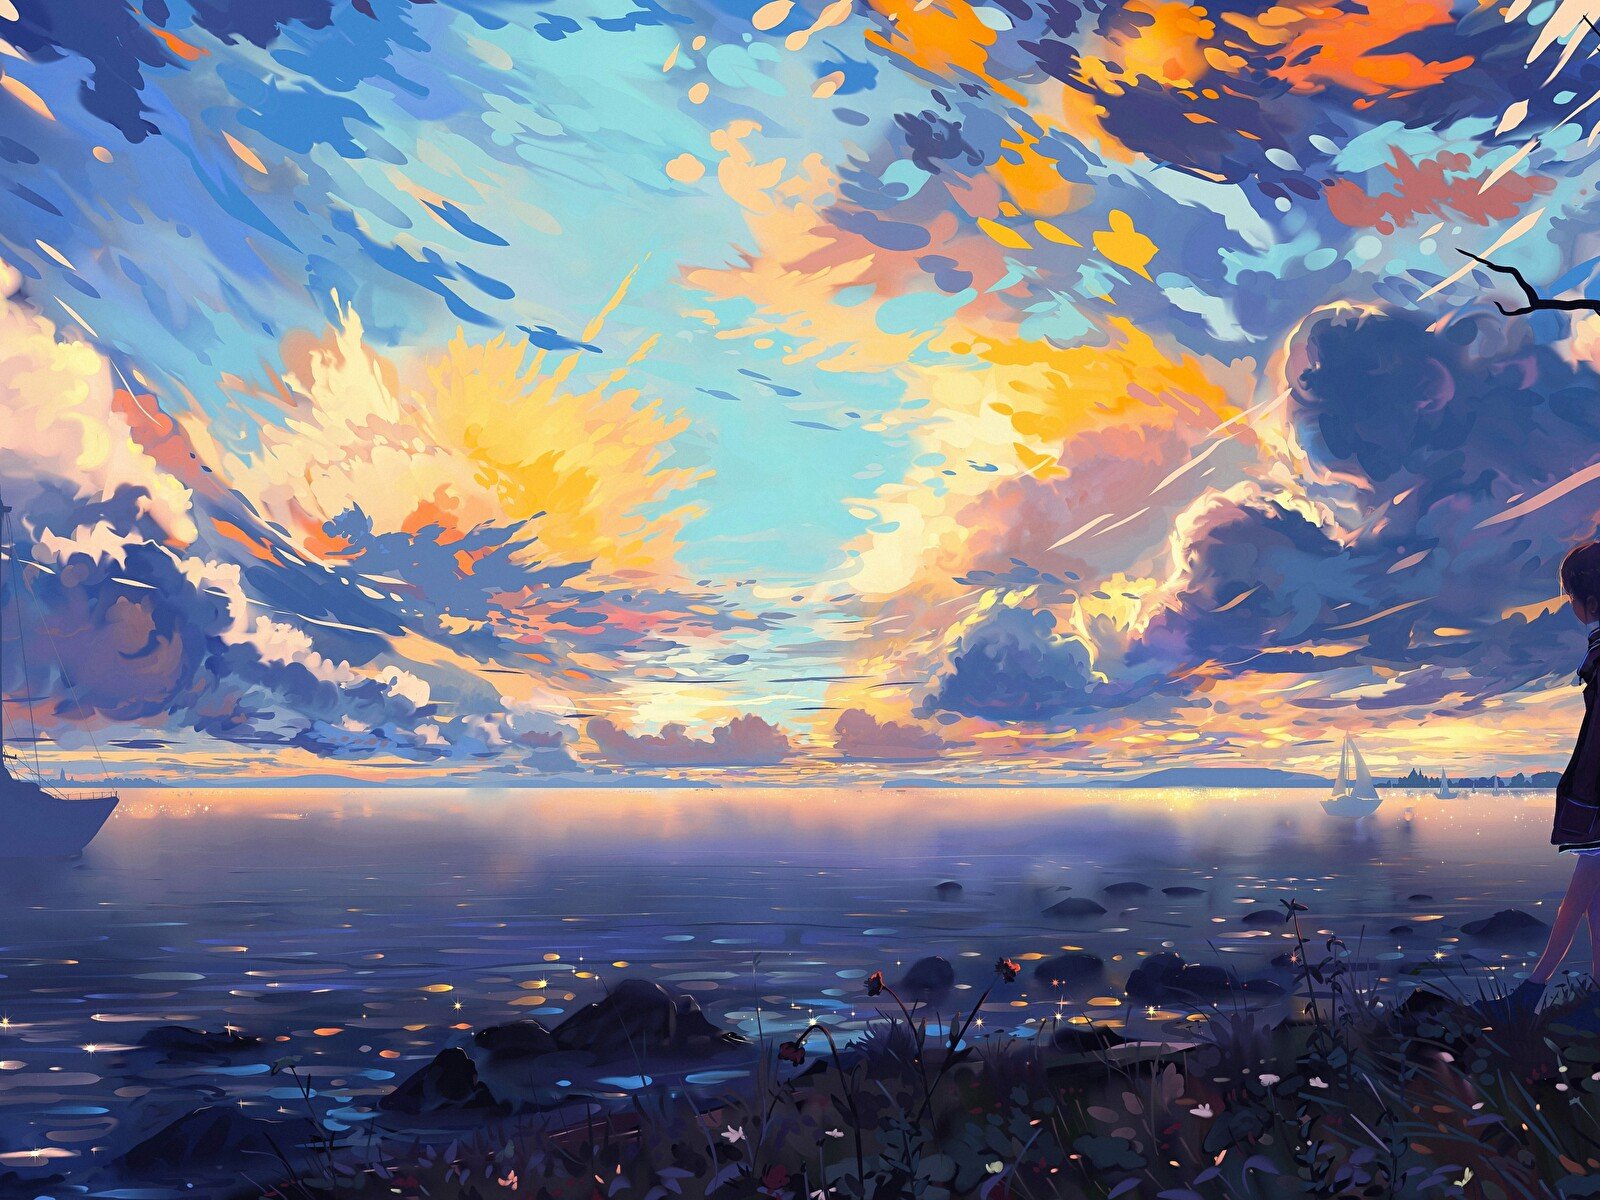 anime landscape for desktop, sea, ships, colorful, clouds, scenic, tree, horizon [3840x2160]